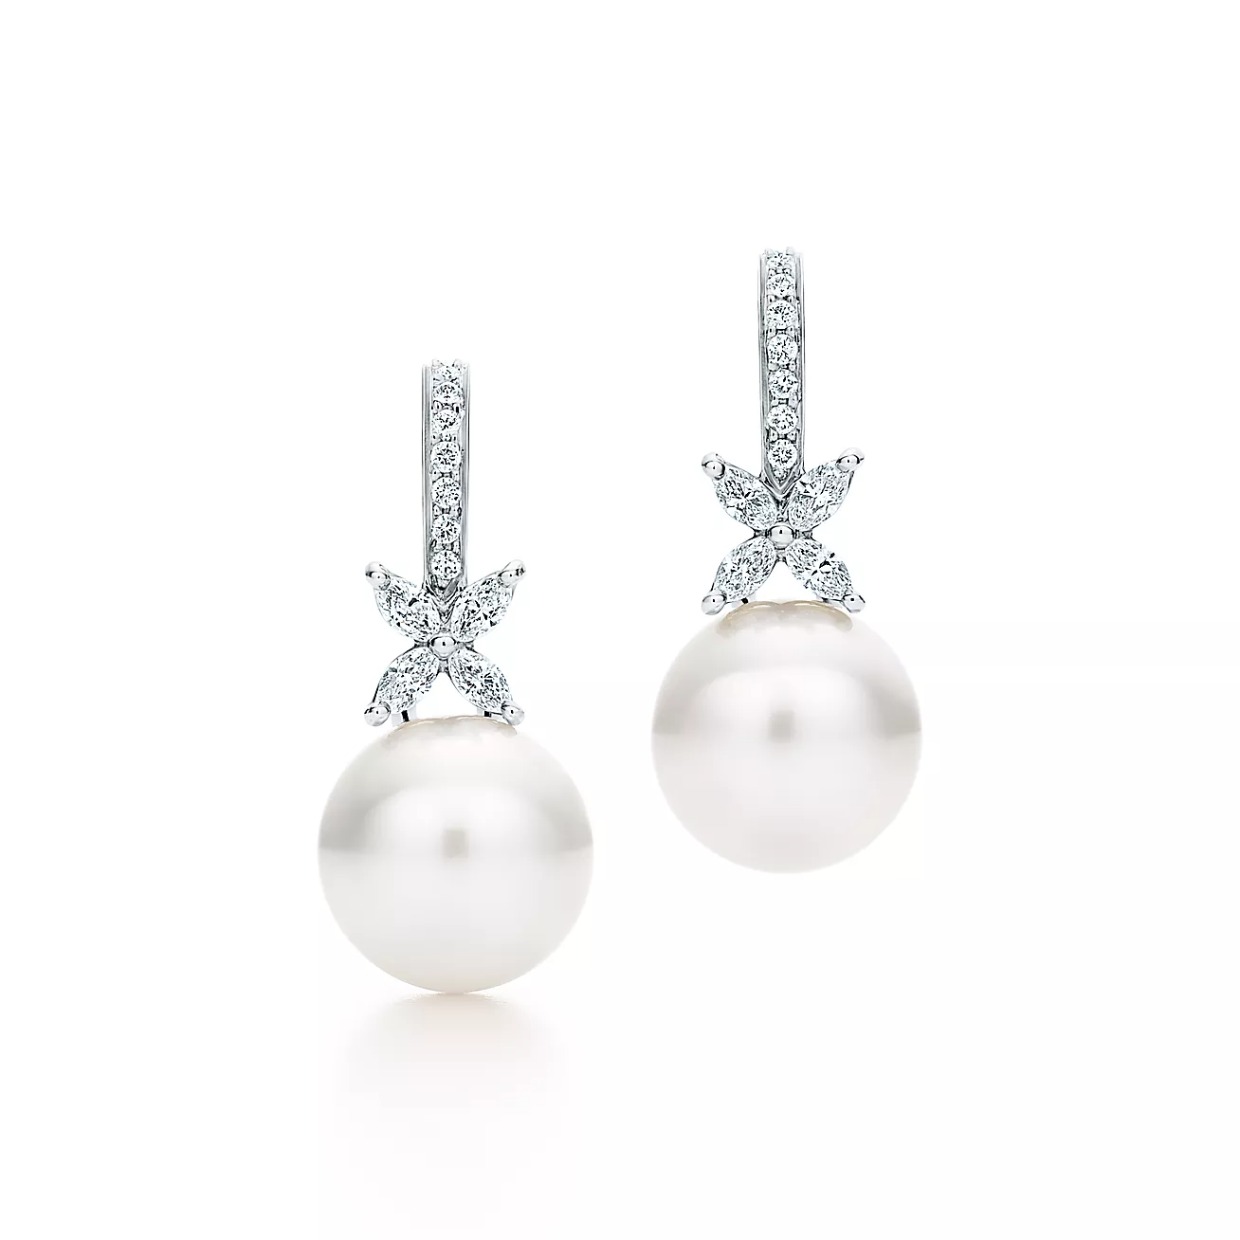 Naomi Biden's Tiffany & Co diamond and pearl earrings